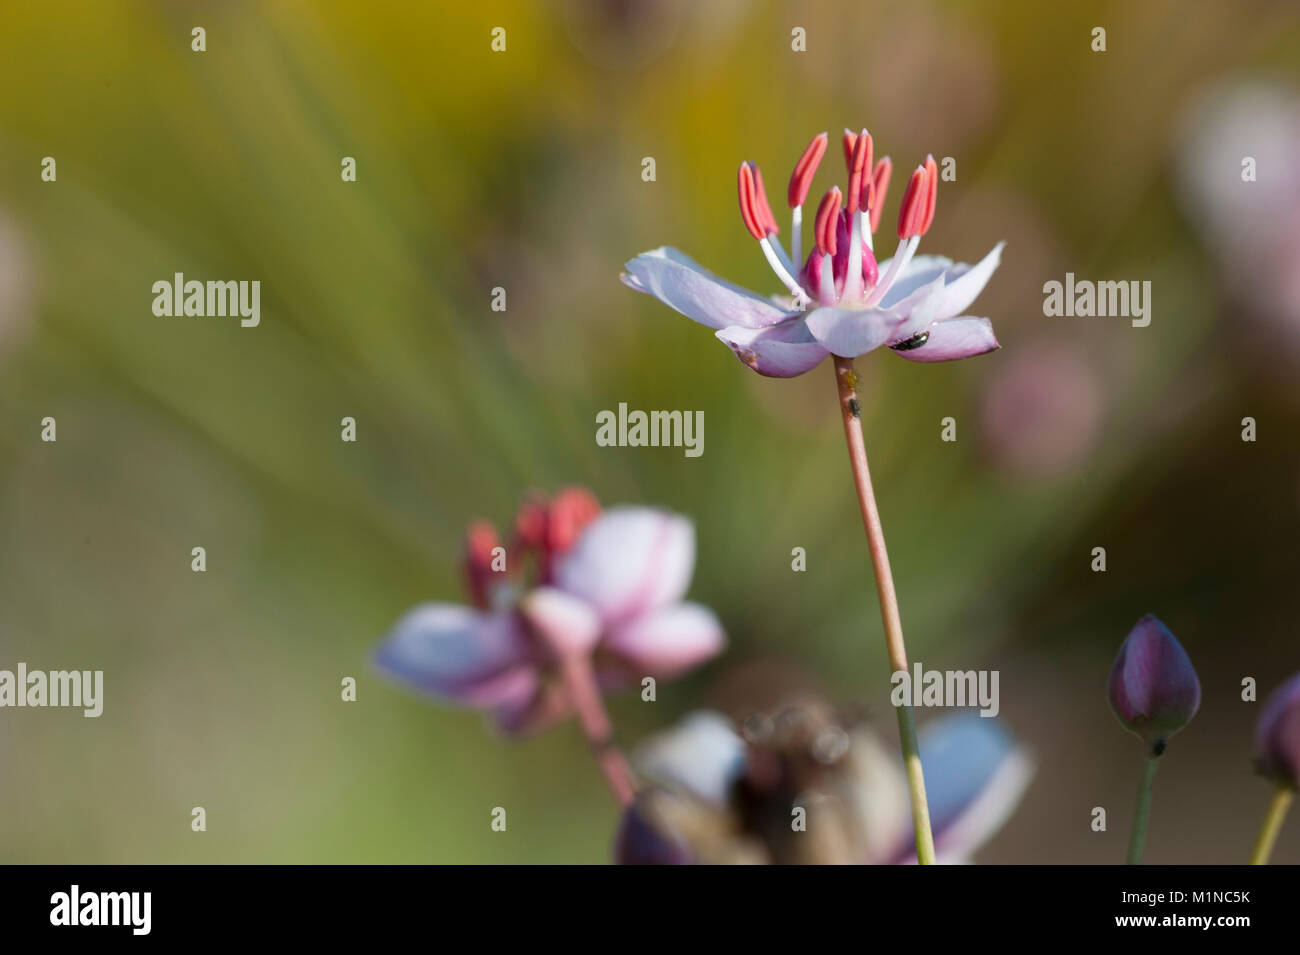 Butomus umbellatus,Schwanenblume,Flowering Rush Stock Photo